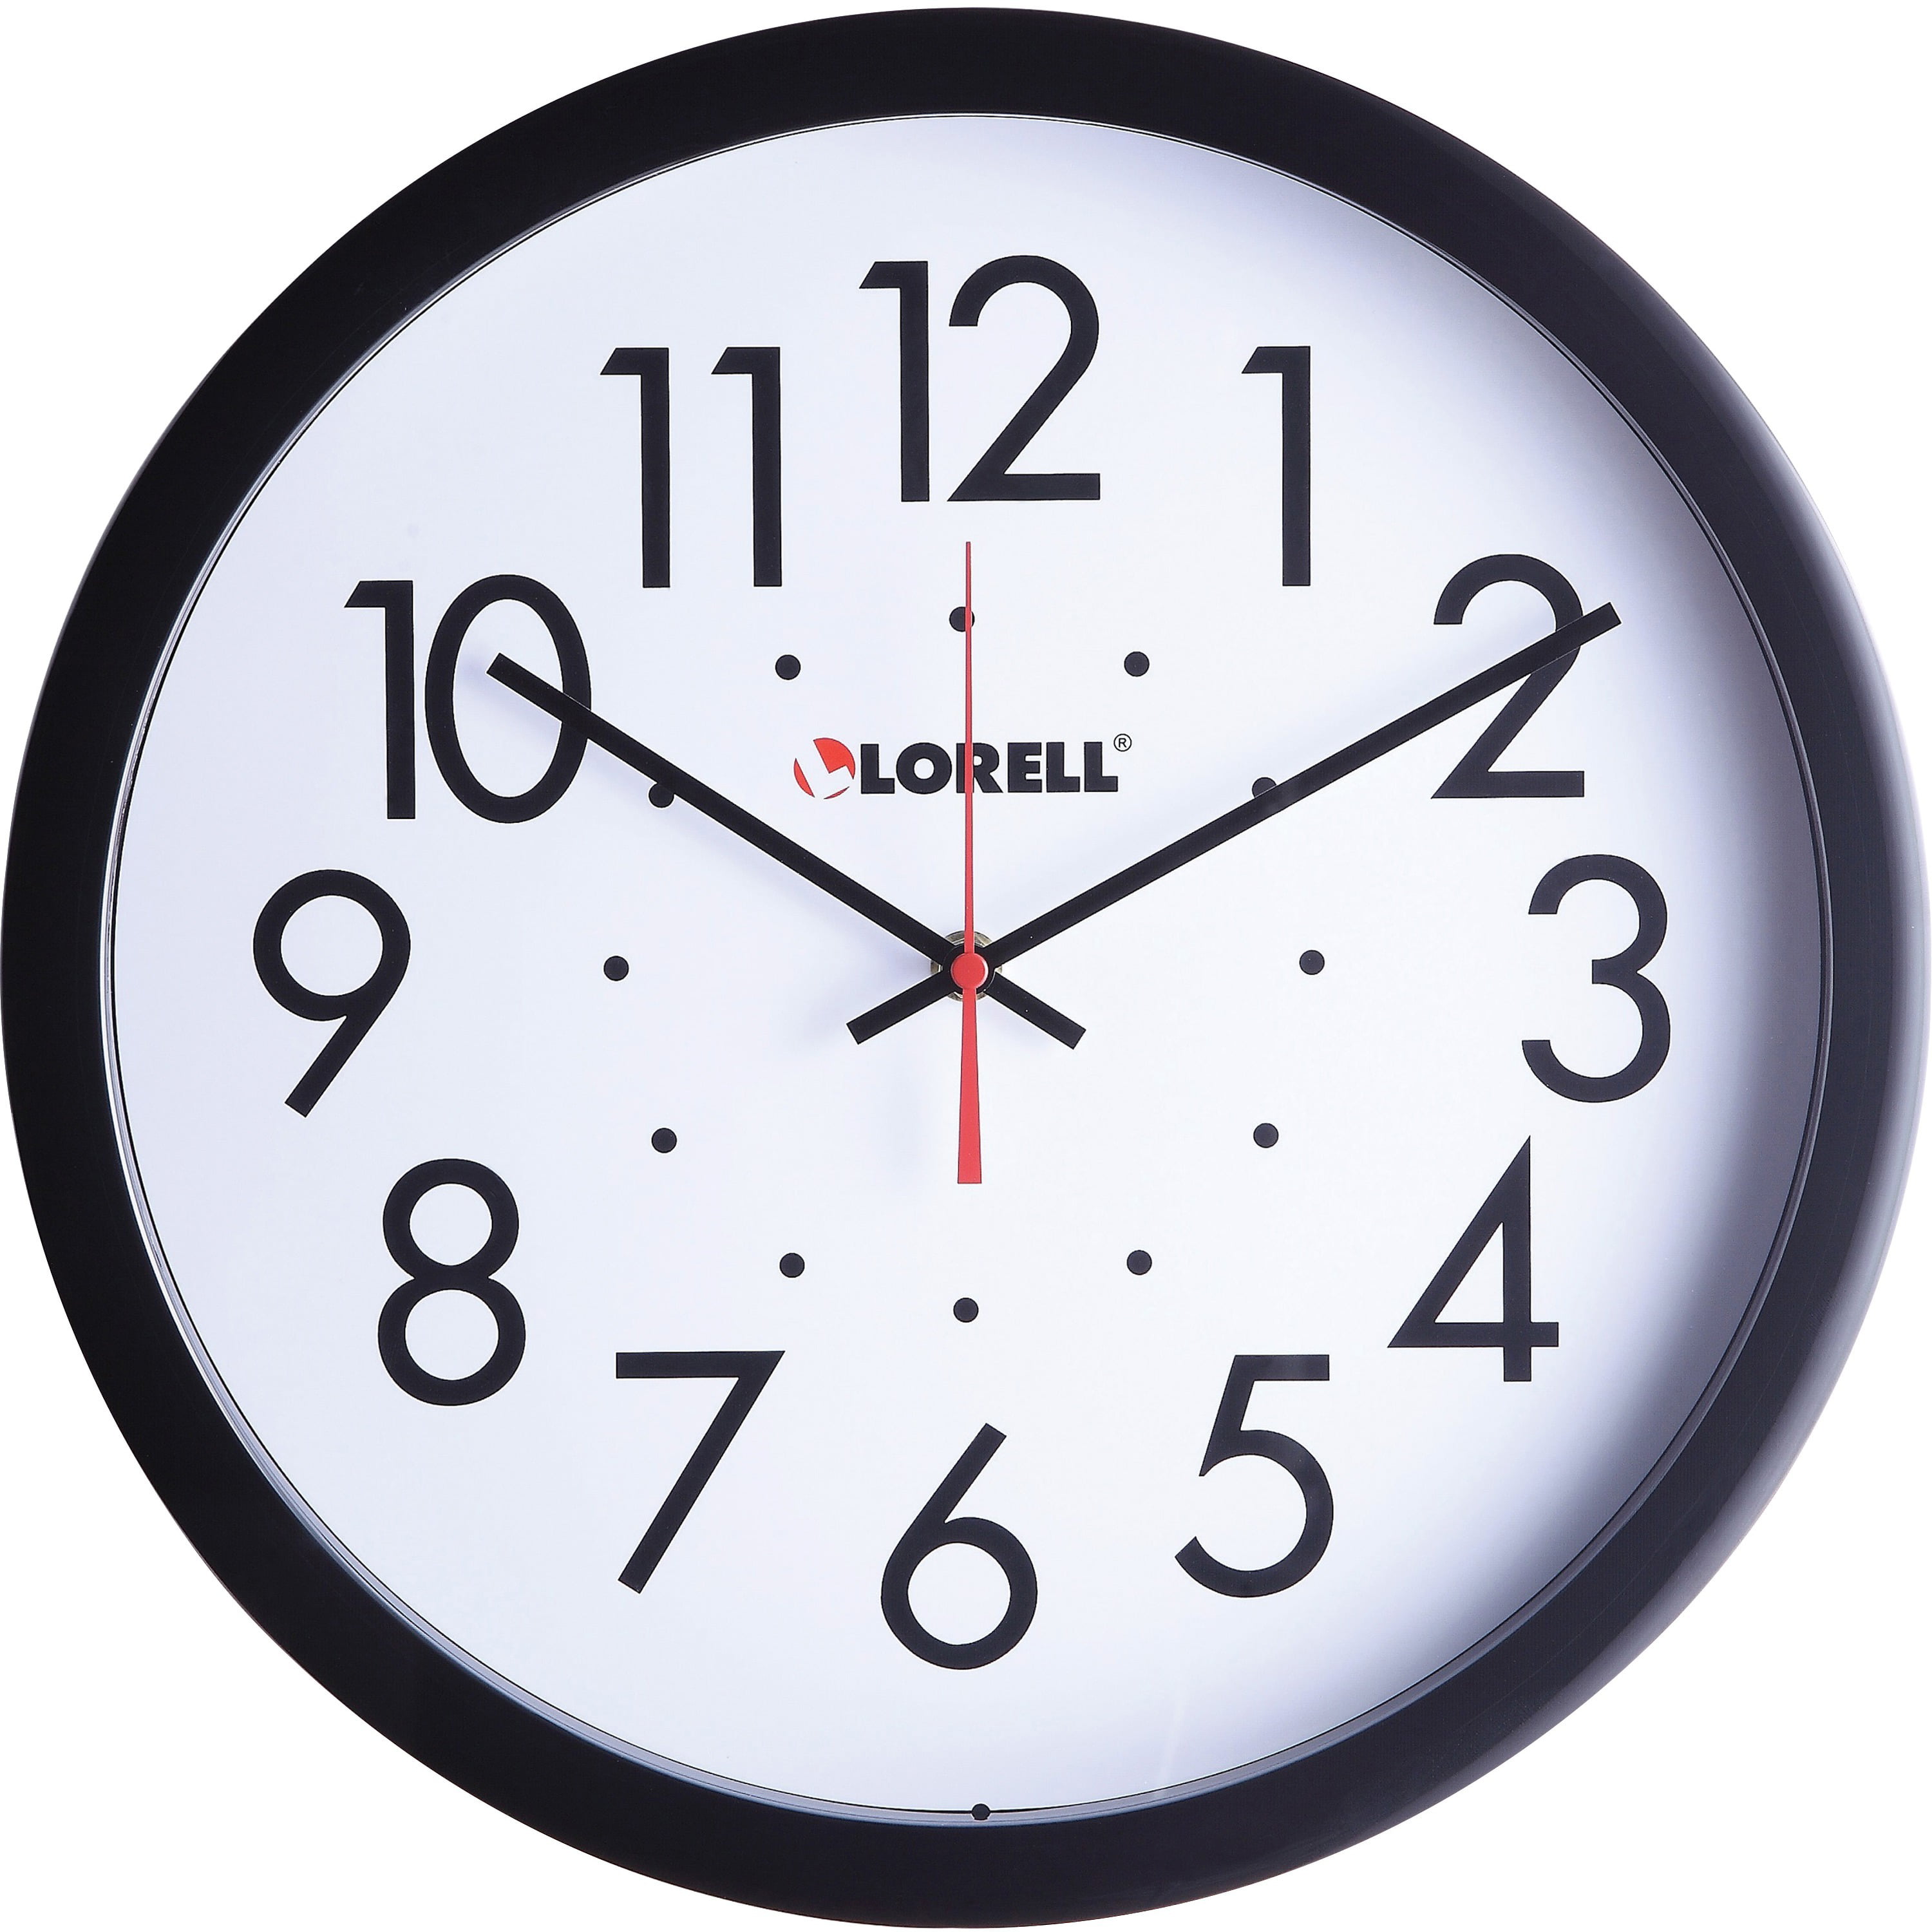 Lorell Llr61009 14 12 Self Set Wall Clock 1